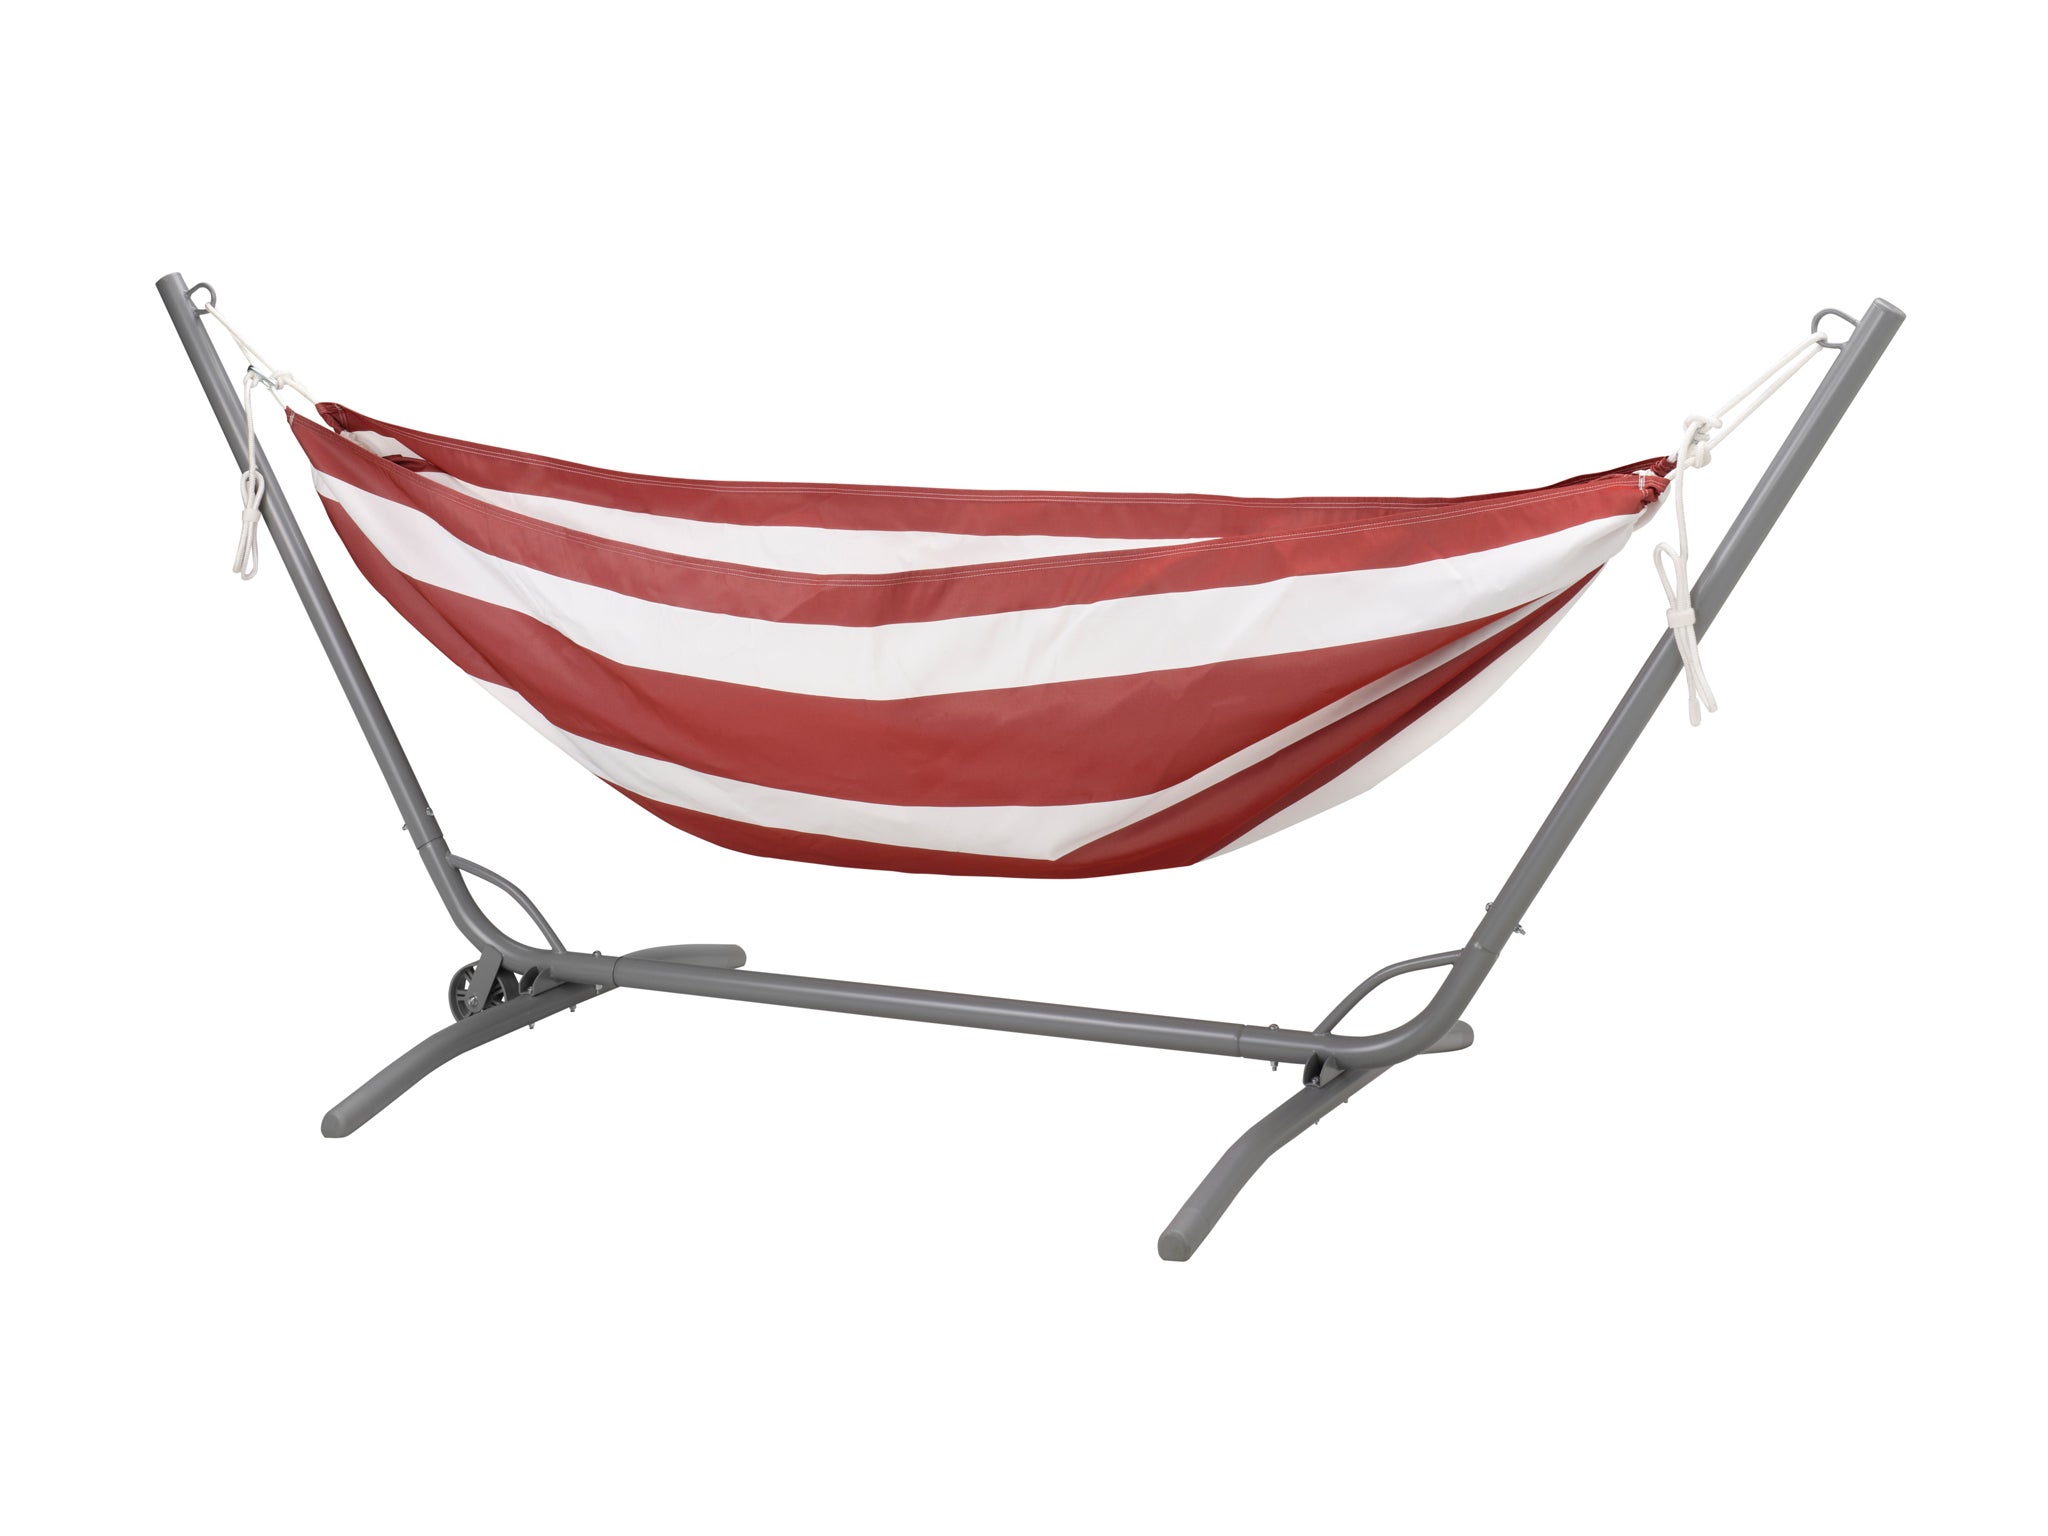 Ikea G†r” Hamn”n hammock with stand.jpg